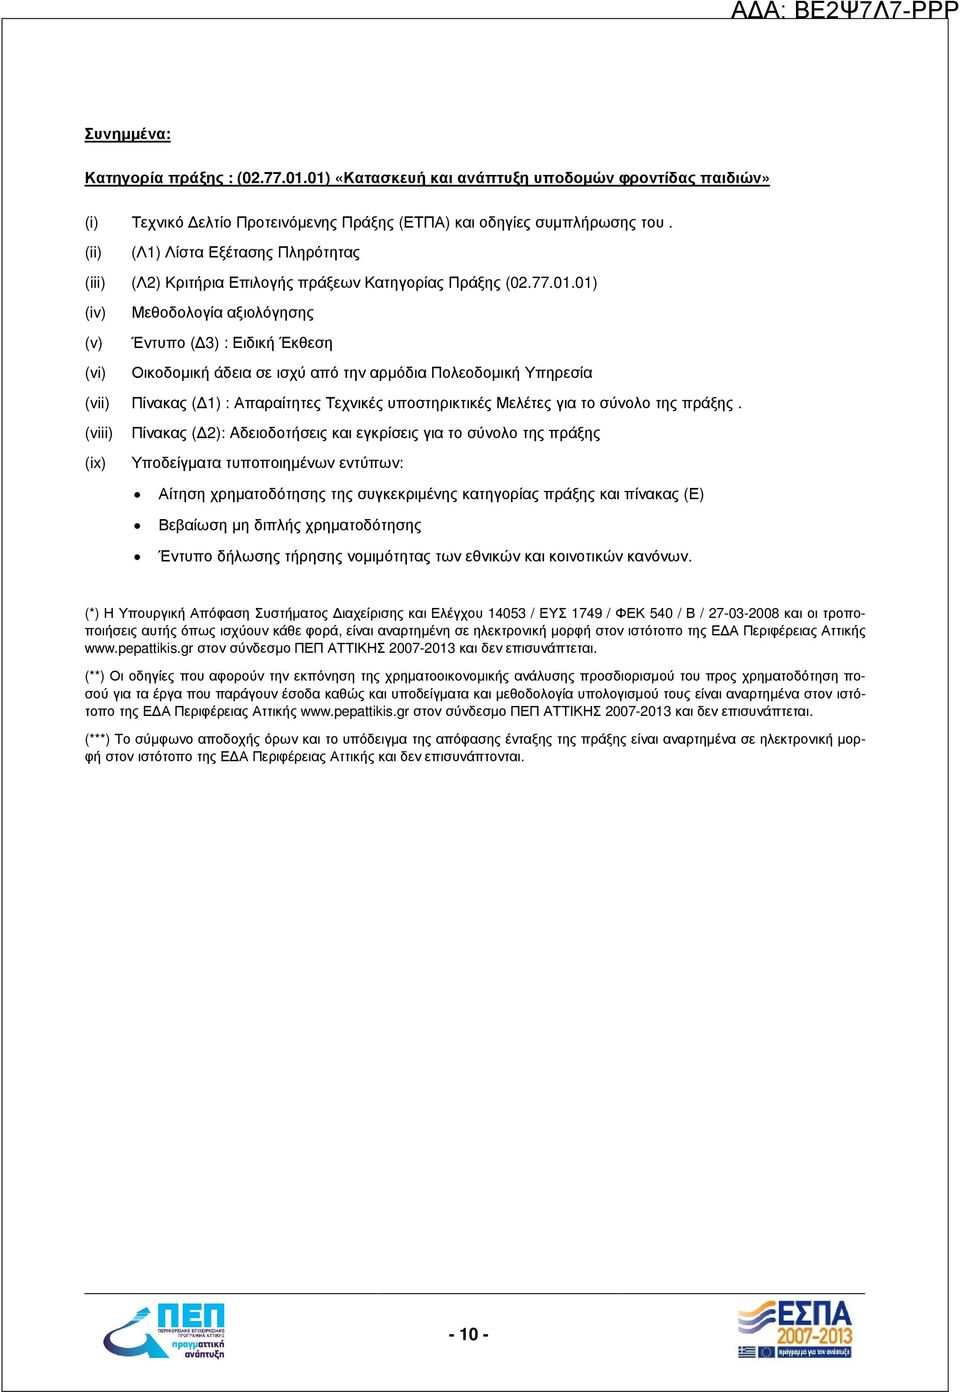 01) (iv) Μεθοδολογία αξιολόγησης (v) Έντυπο ( 3) : Ειδική Έκθεση (vi) Οικοδοµική άδεια σε ισχύ από την αρµόδια Πολεοδοµική Υπηρεσία (vii) Πίνακας ( 1) : Απαραίτητες Τεχνικές υποστηρικτικές Μελέτες